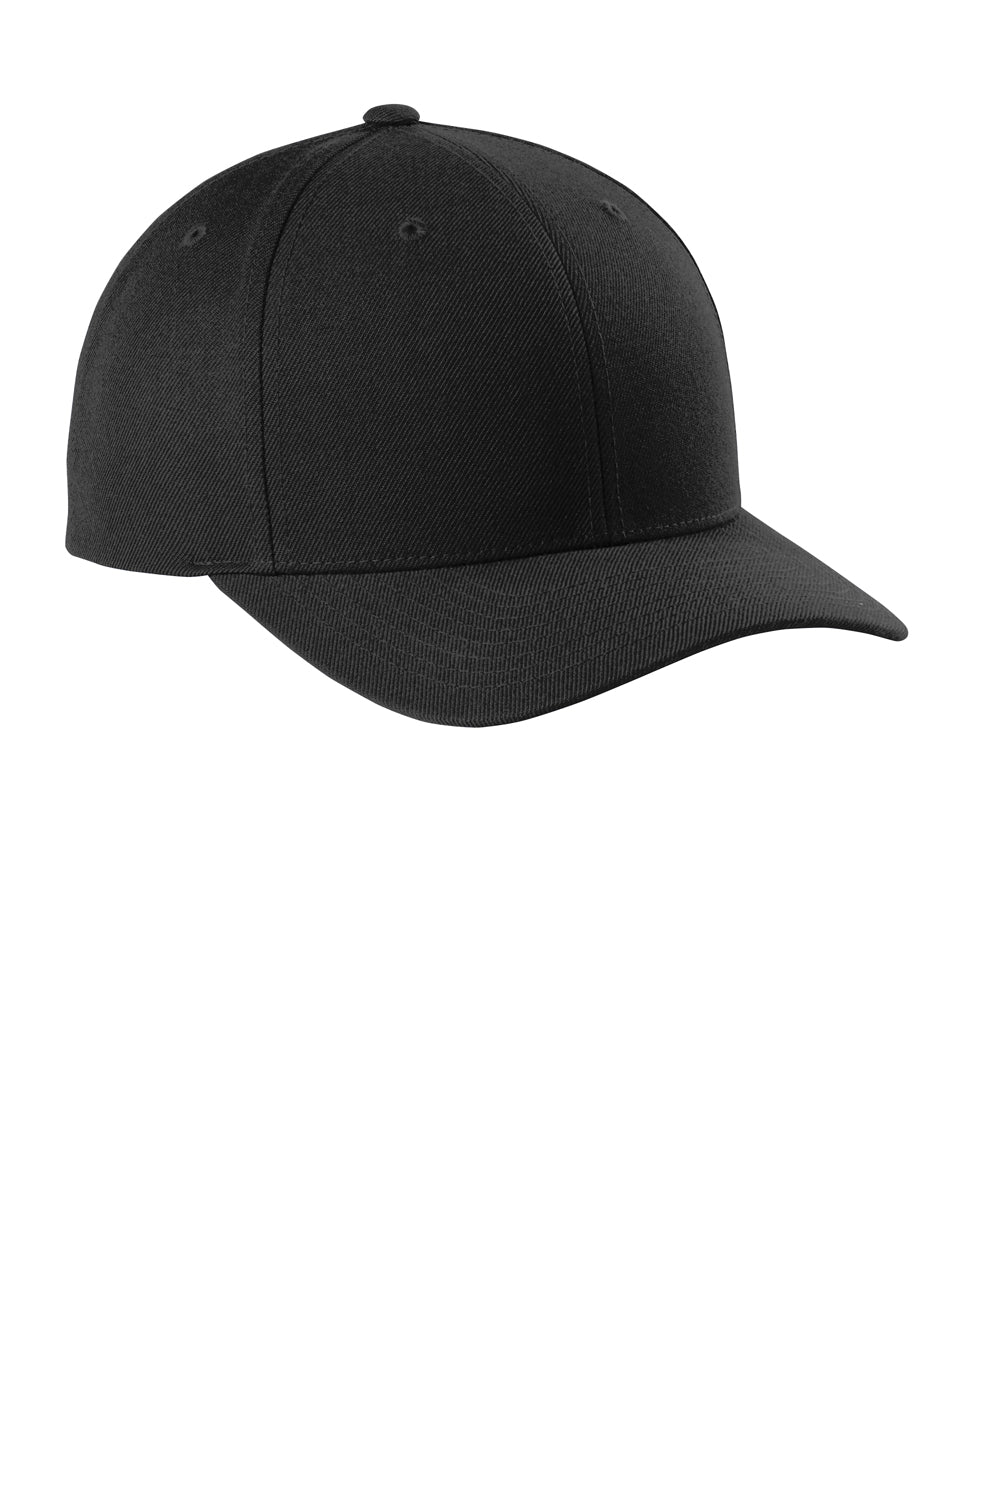 Sport-Tek STC43 Curve Bill Snapback Hat Black Front